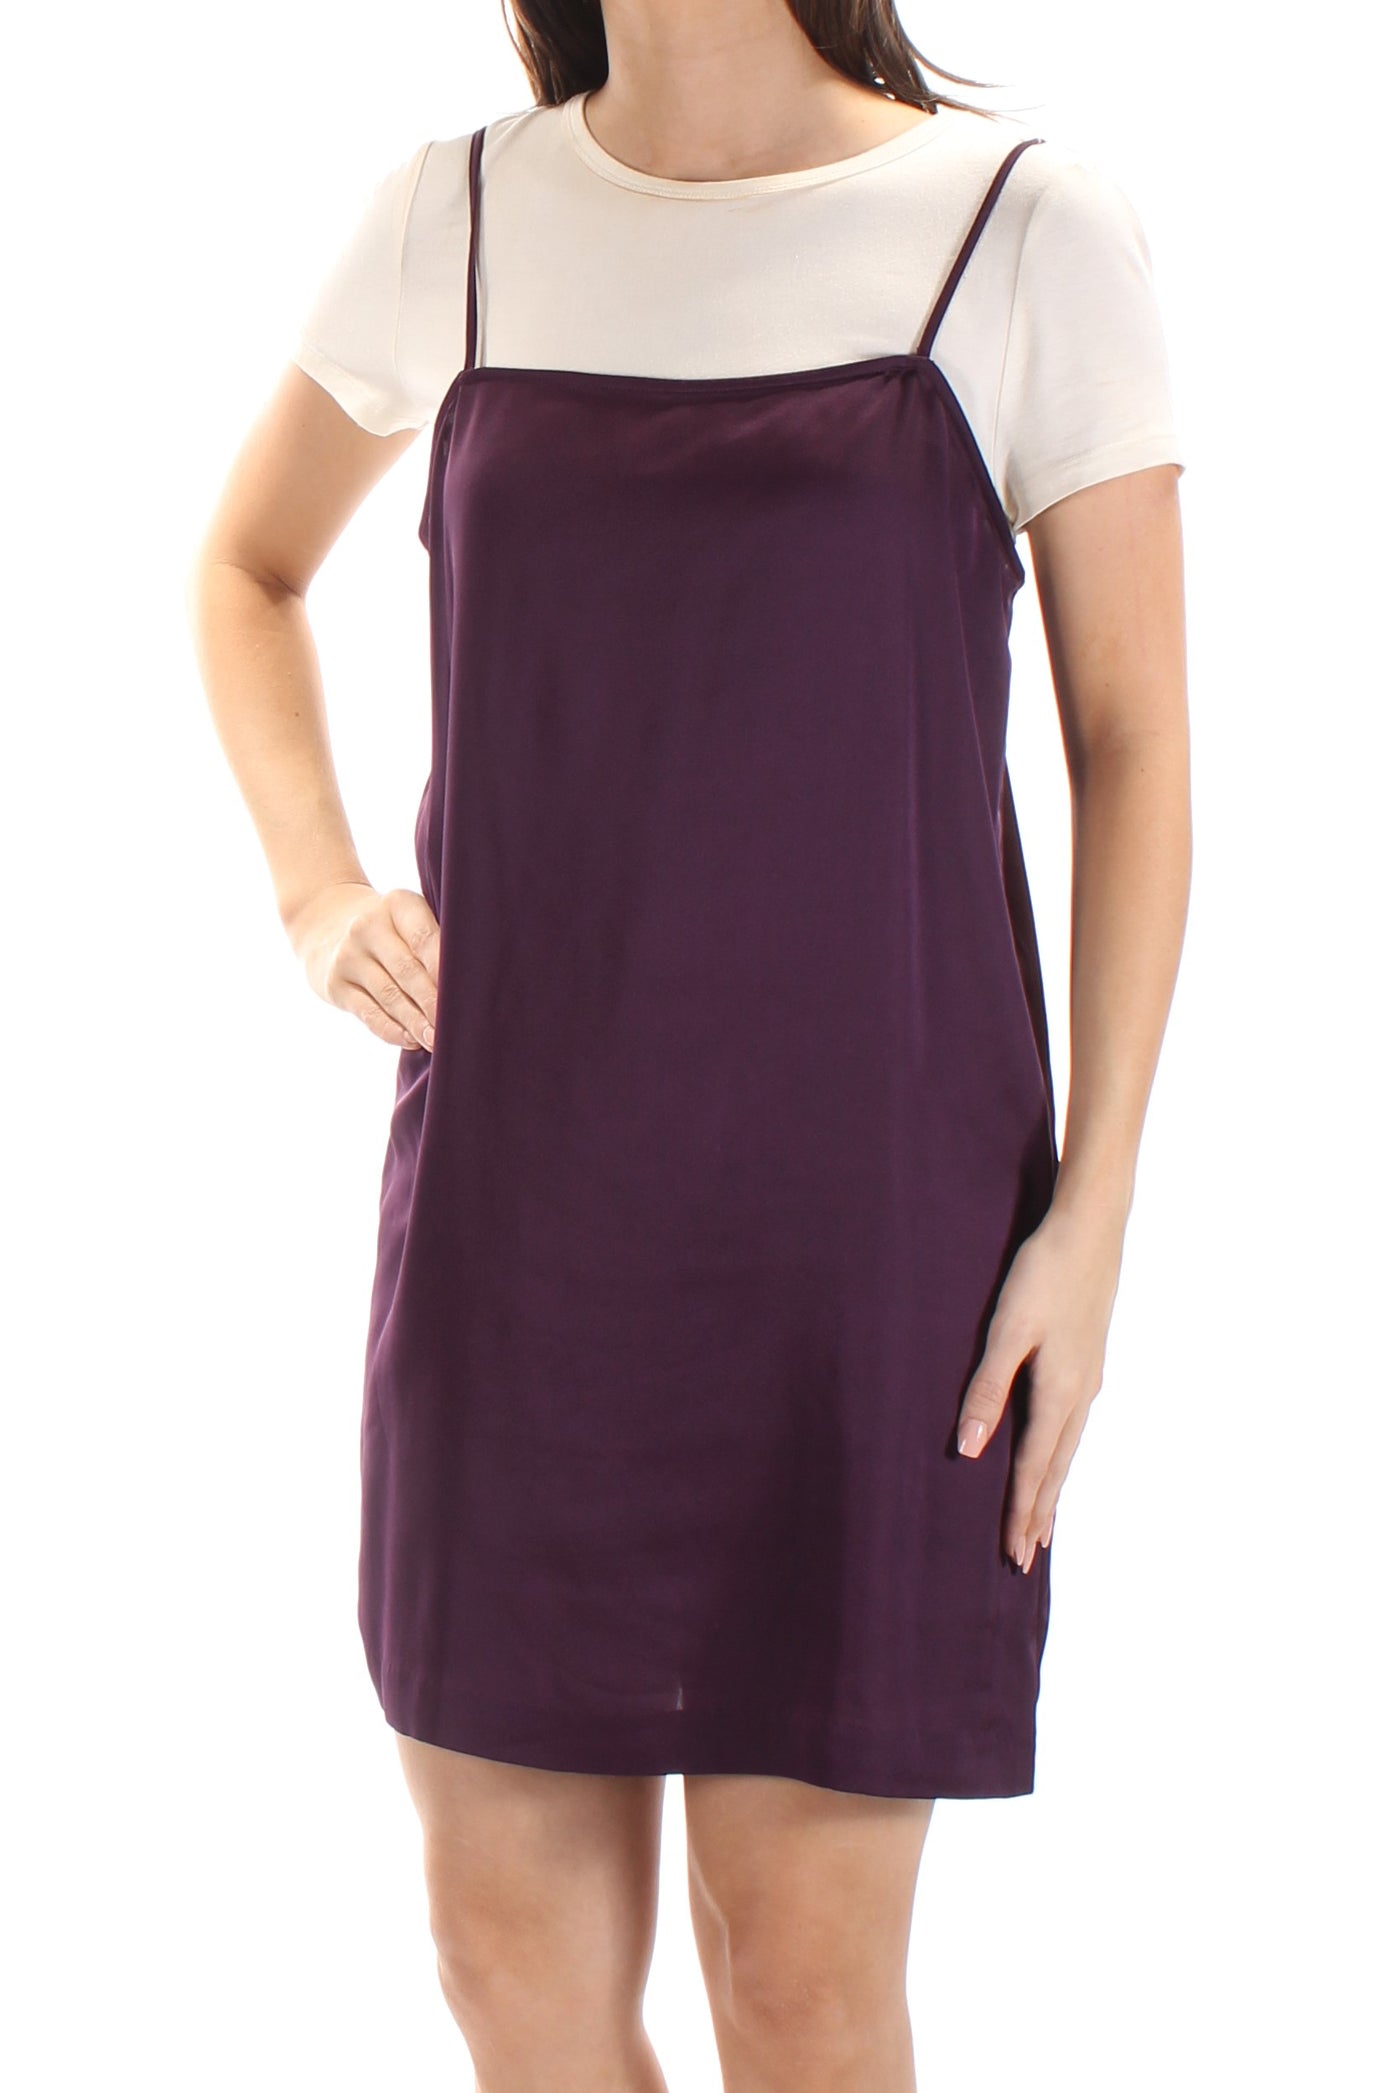 KENSIE Womens Purple Layered-look Slip Short Sleeve Jewel Neck Above The Knee Shift Dress